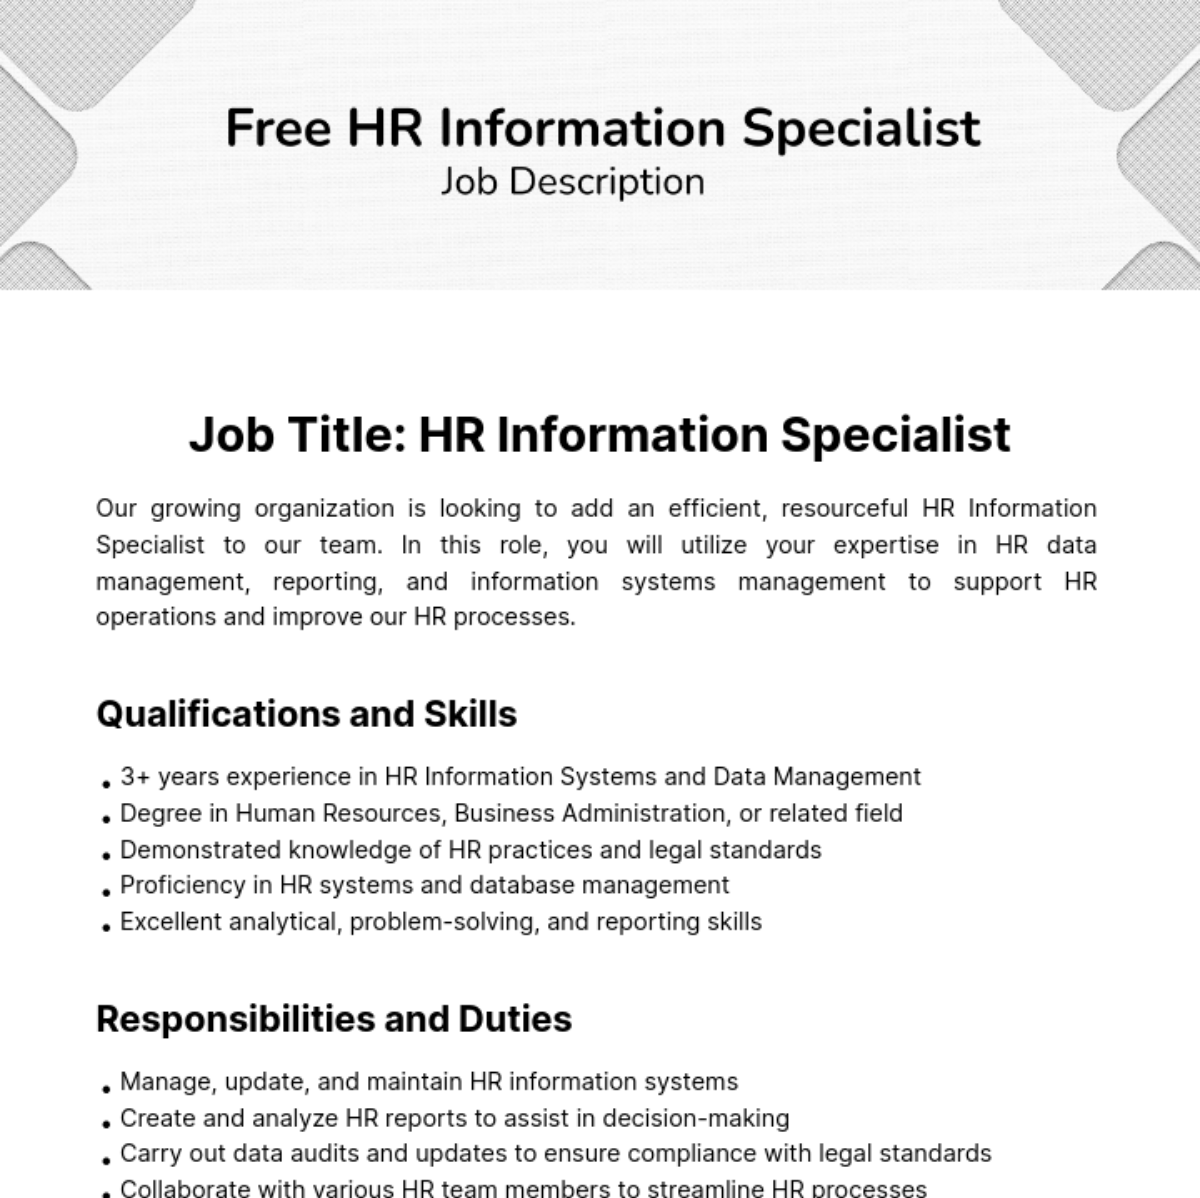 Human Resources (HR) Information Specialist Job Description Template